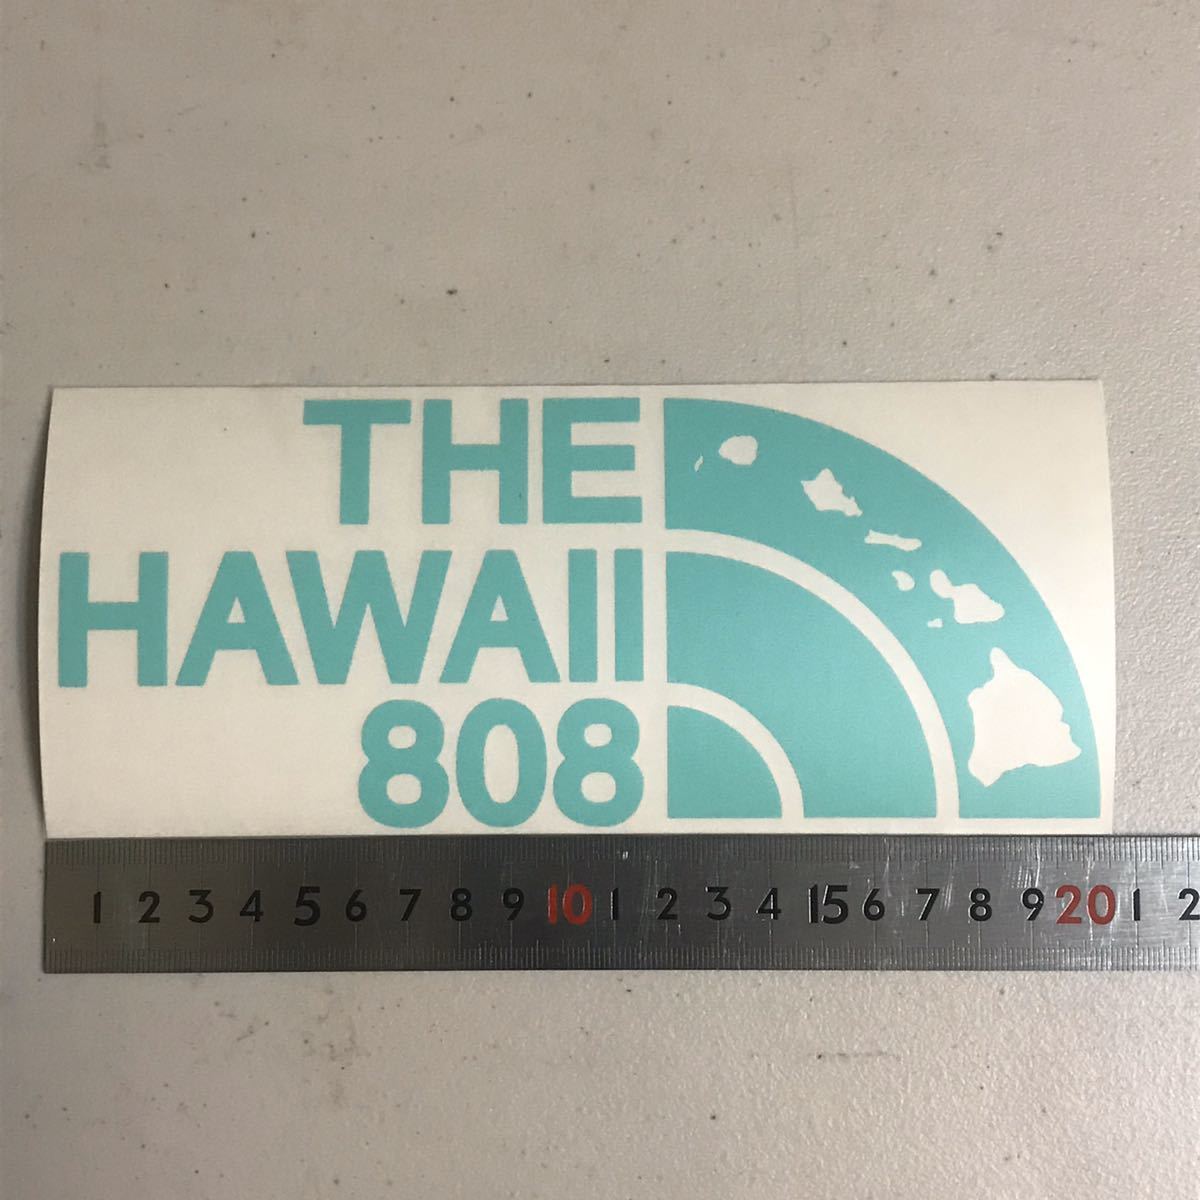 THE HAWAII 808 ステッカー ミントグリーン ハワイ アロハ ハワイ諸島 USDM HDM 808allday in4mation hilife he i_画像1